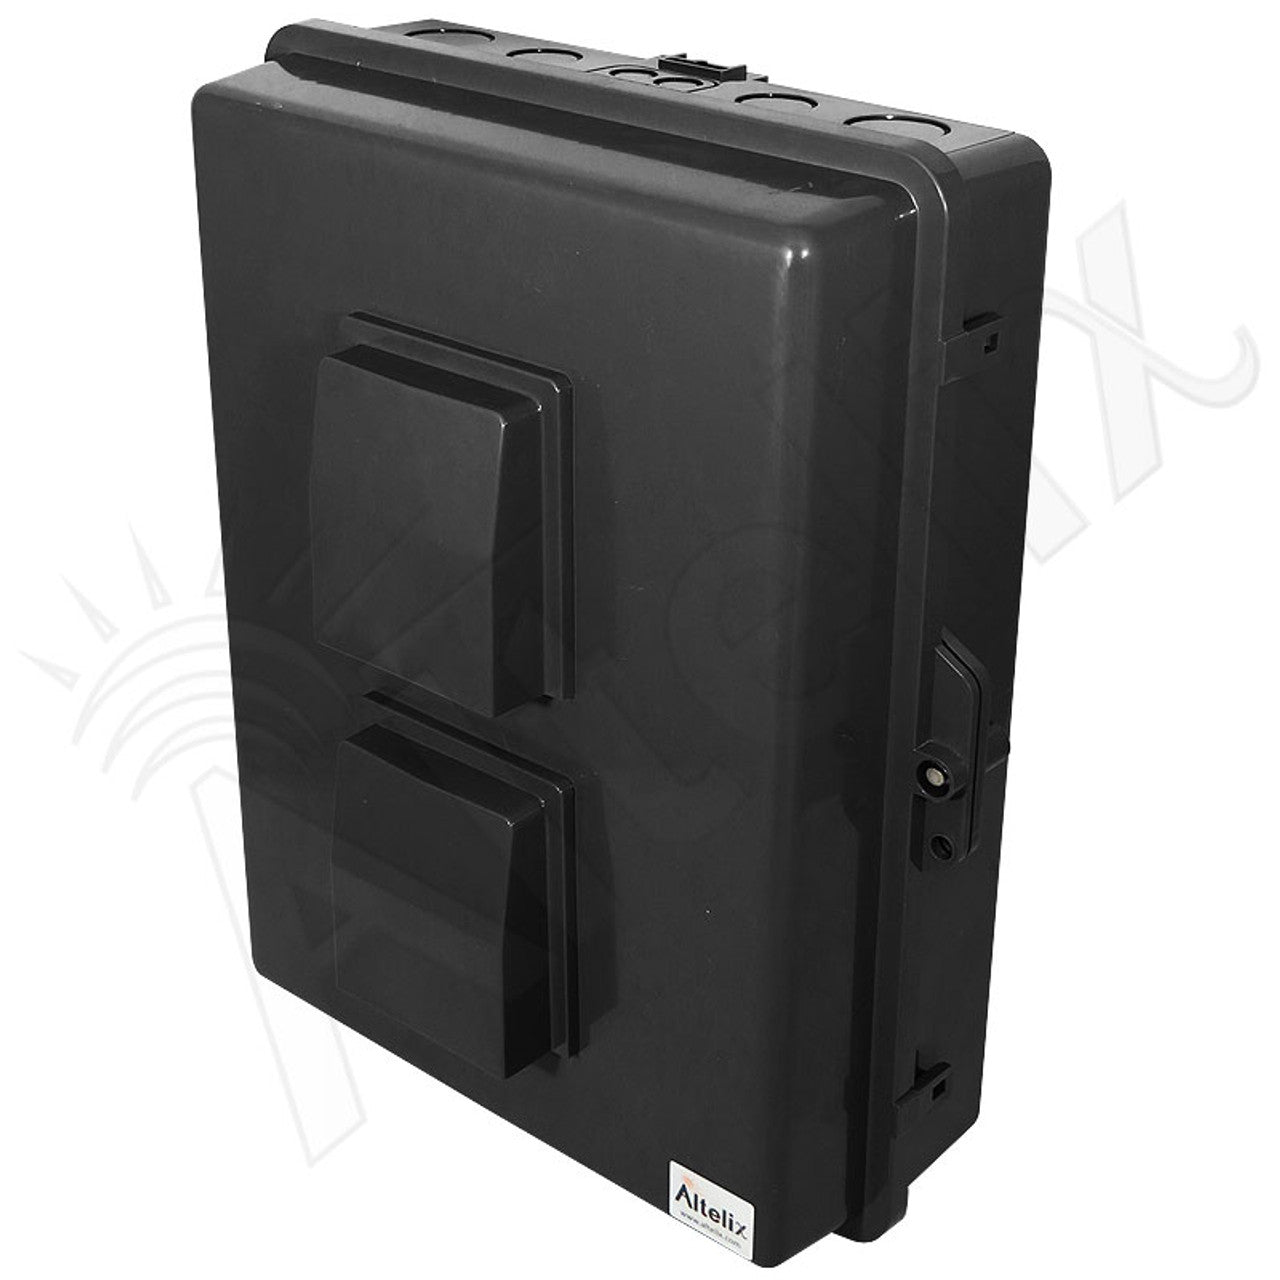 Buy black Altelix 17x14x6 PC + ABS Weatherproof Vented Utility Box NEMA Enclosure with Pole Mount Kit